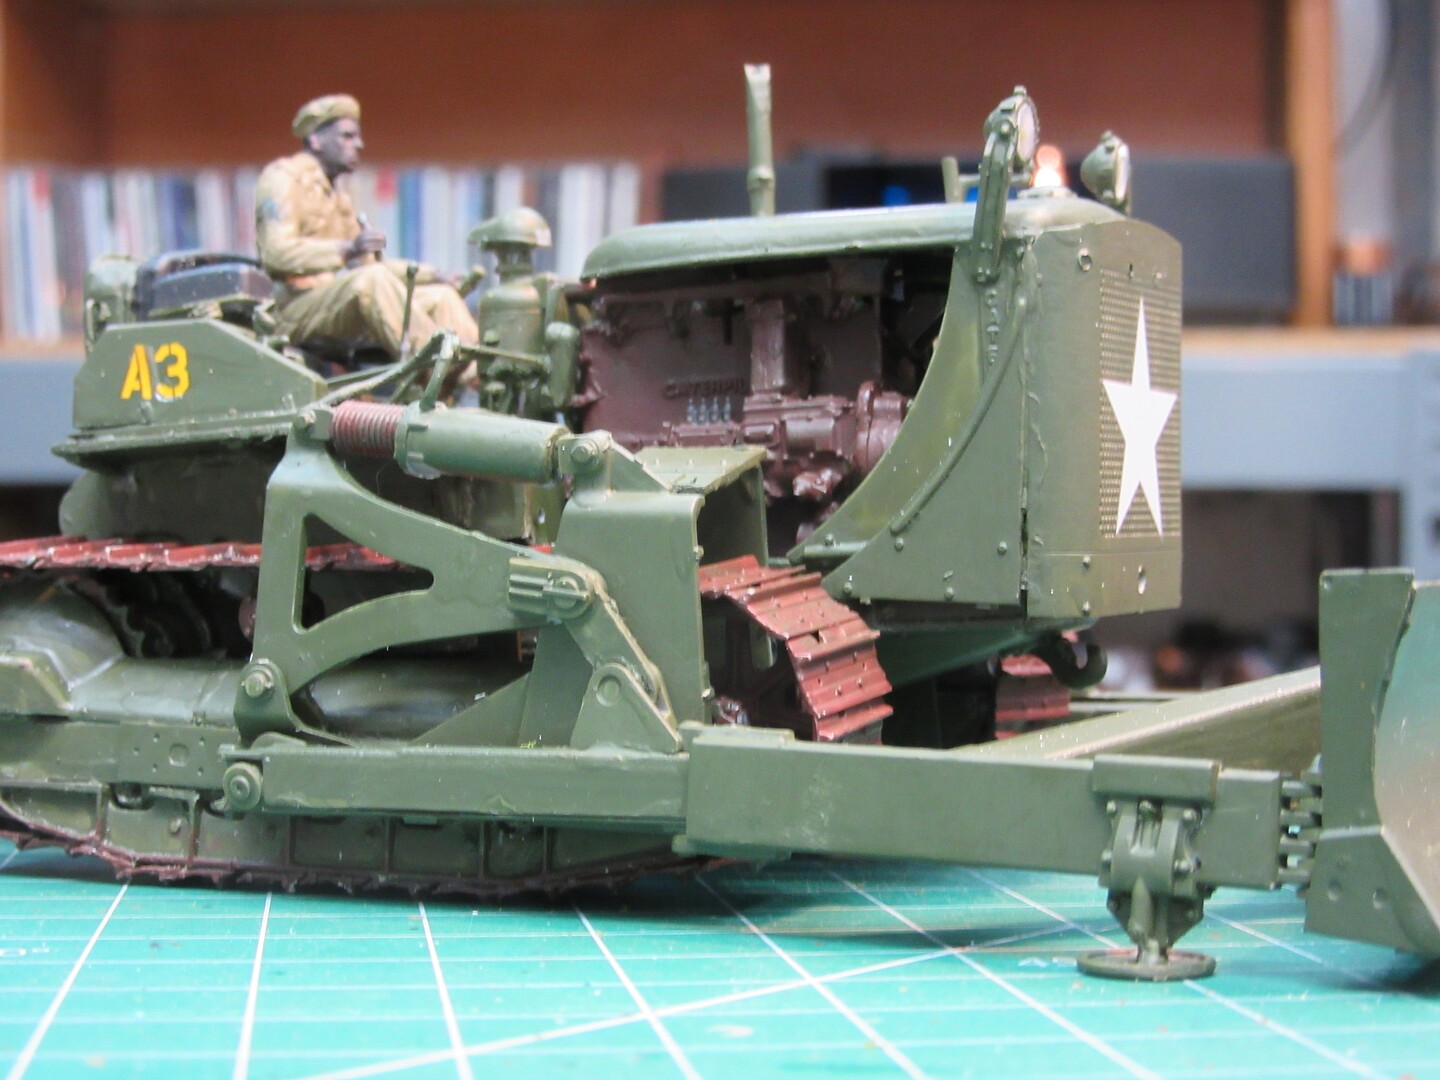 Mini-Art US Army Bulldozer Plastic Model Military Vehicle Kit 1/35 Scale  #35195